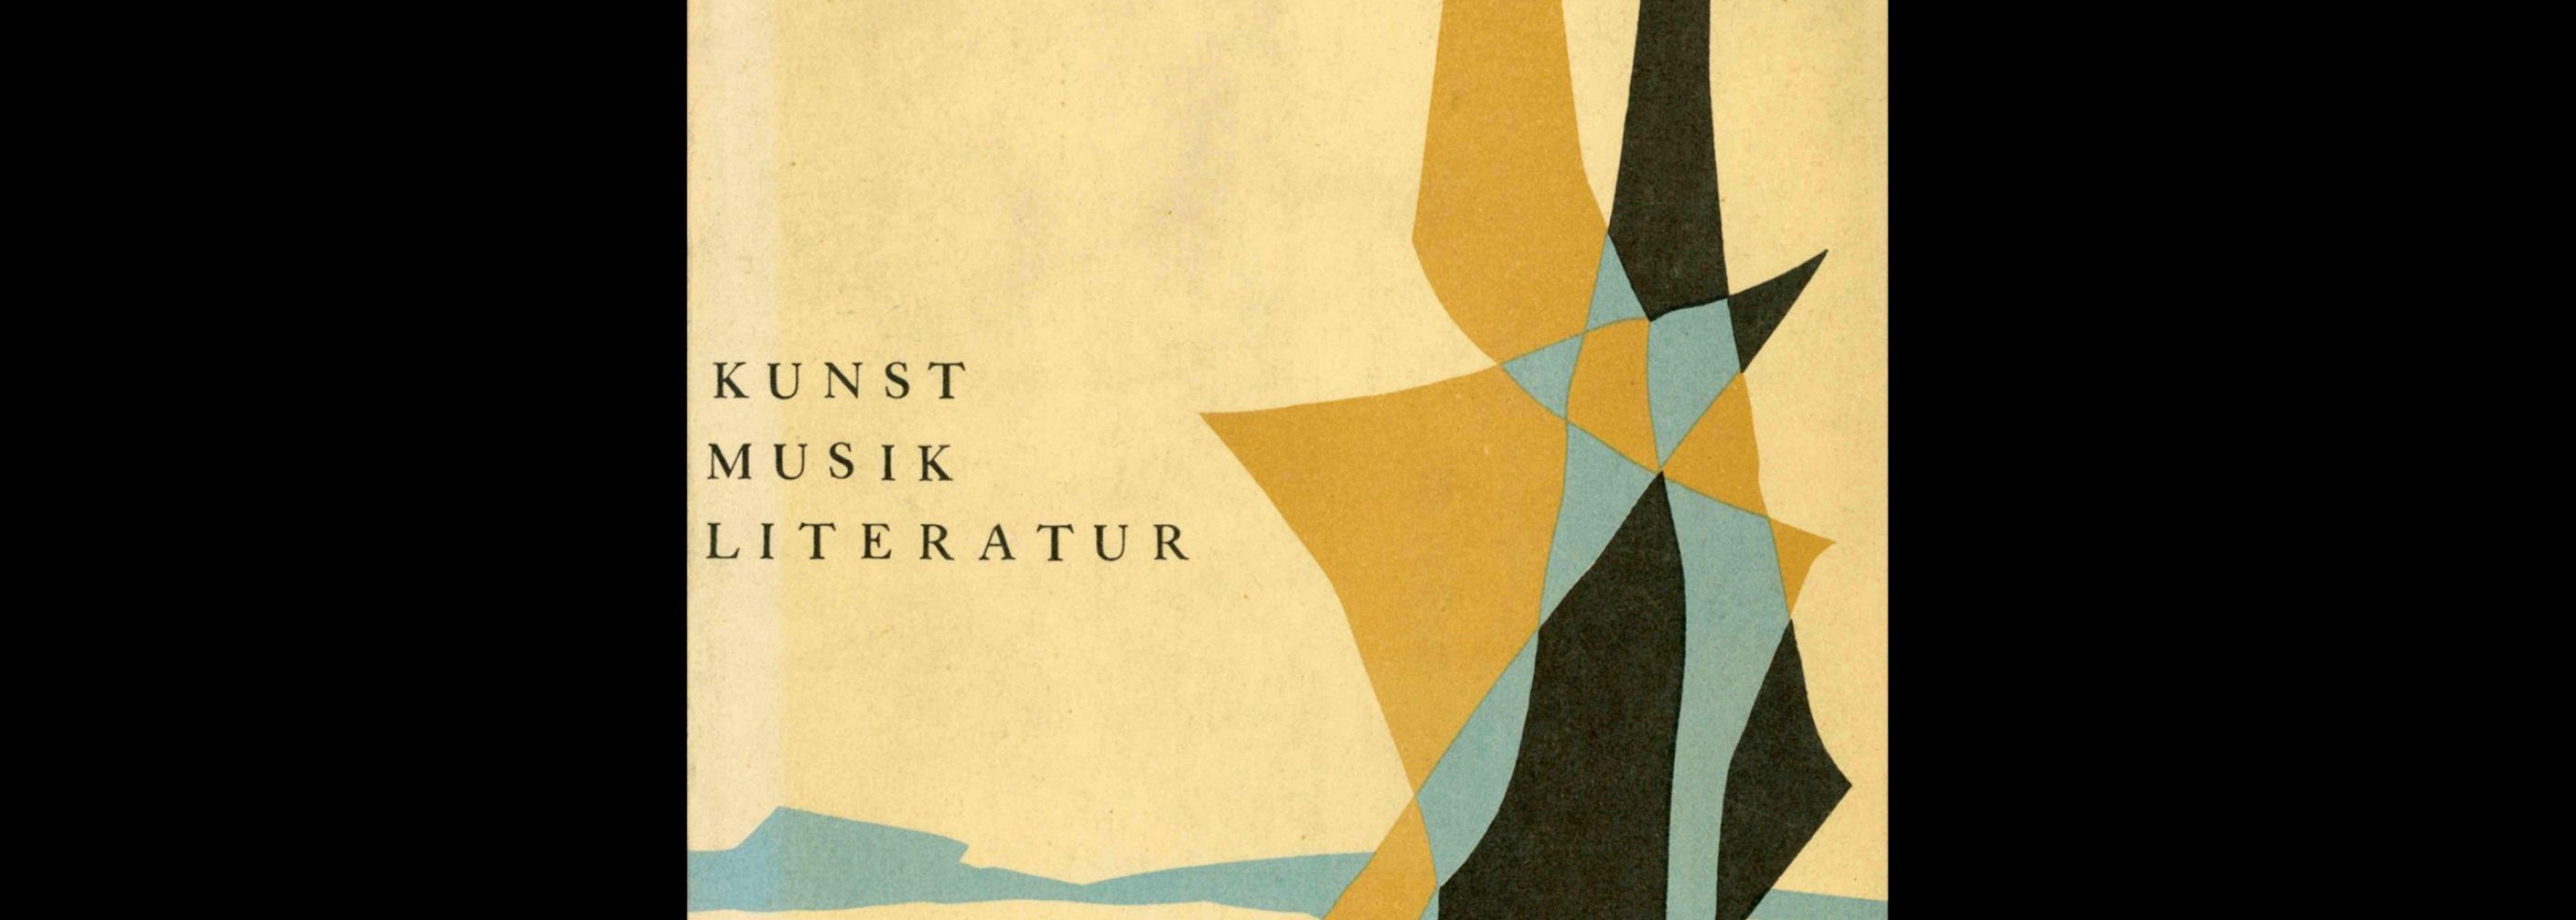 Perspektiven, Literatur, Kunst, Musik, 8, 1954. Cover design by Clemens L. Mirmont